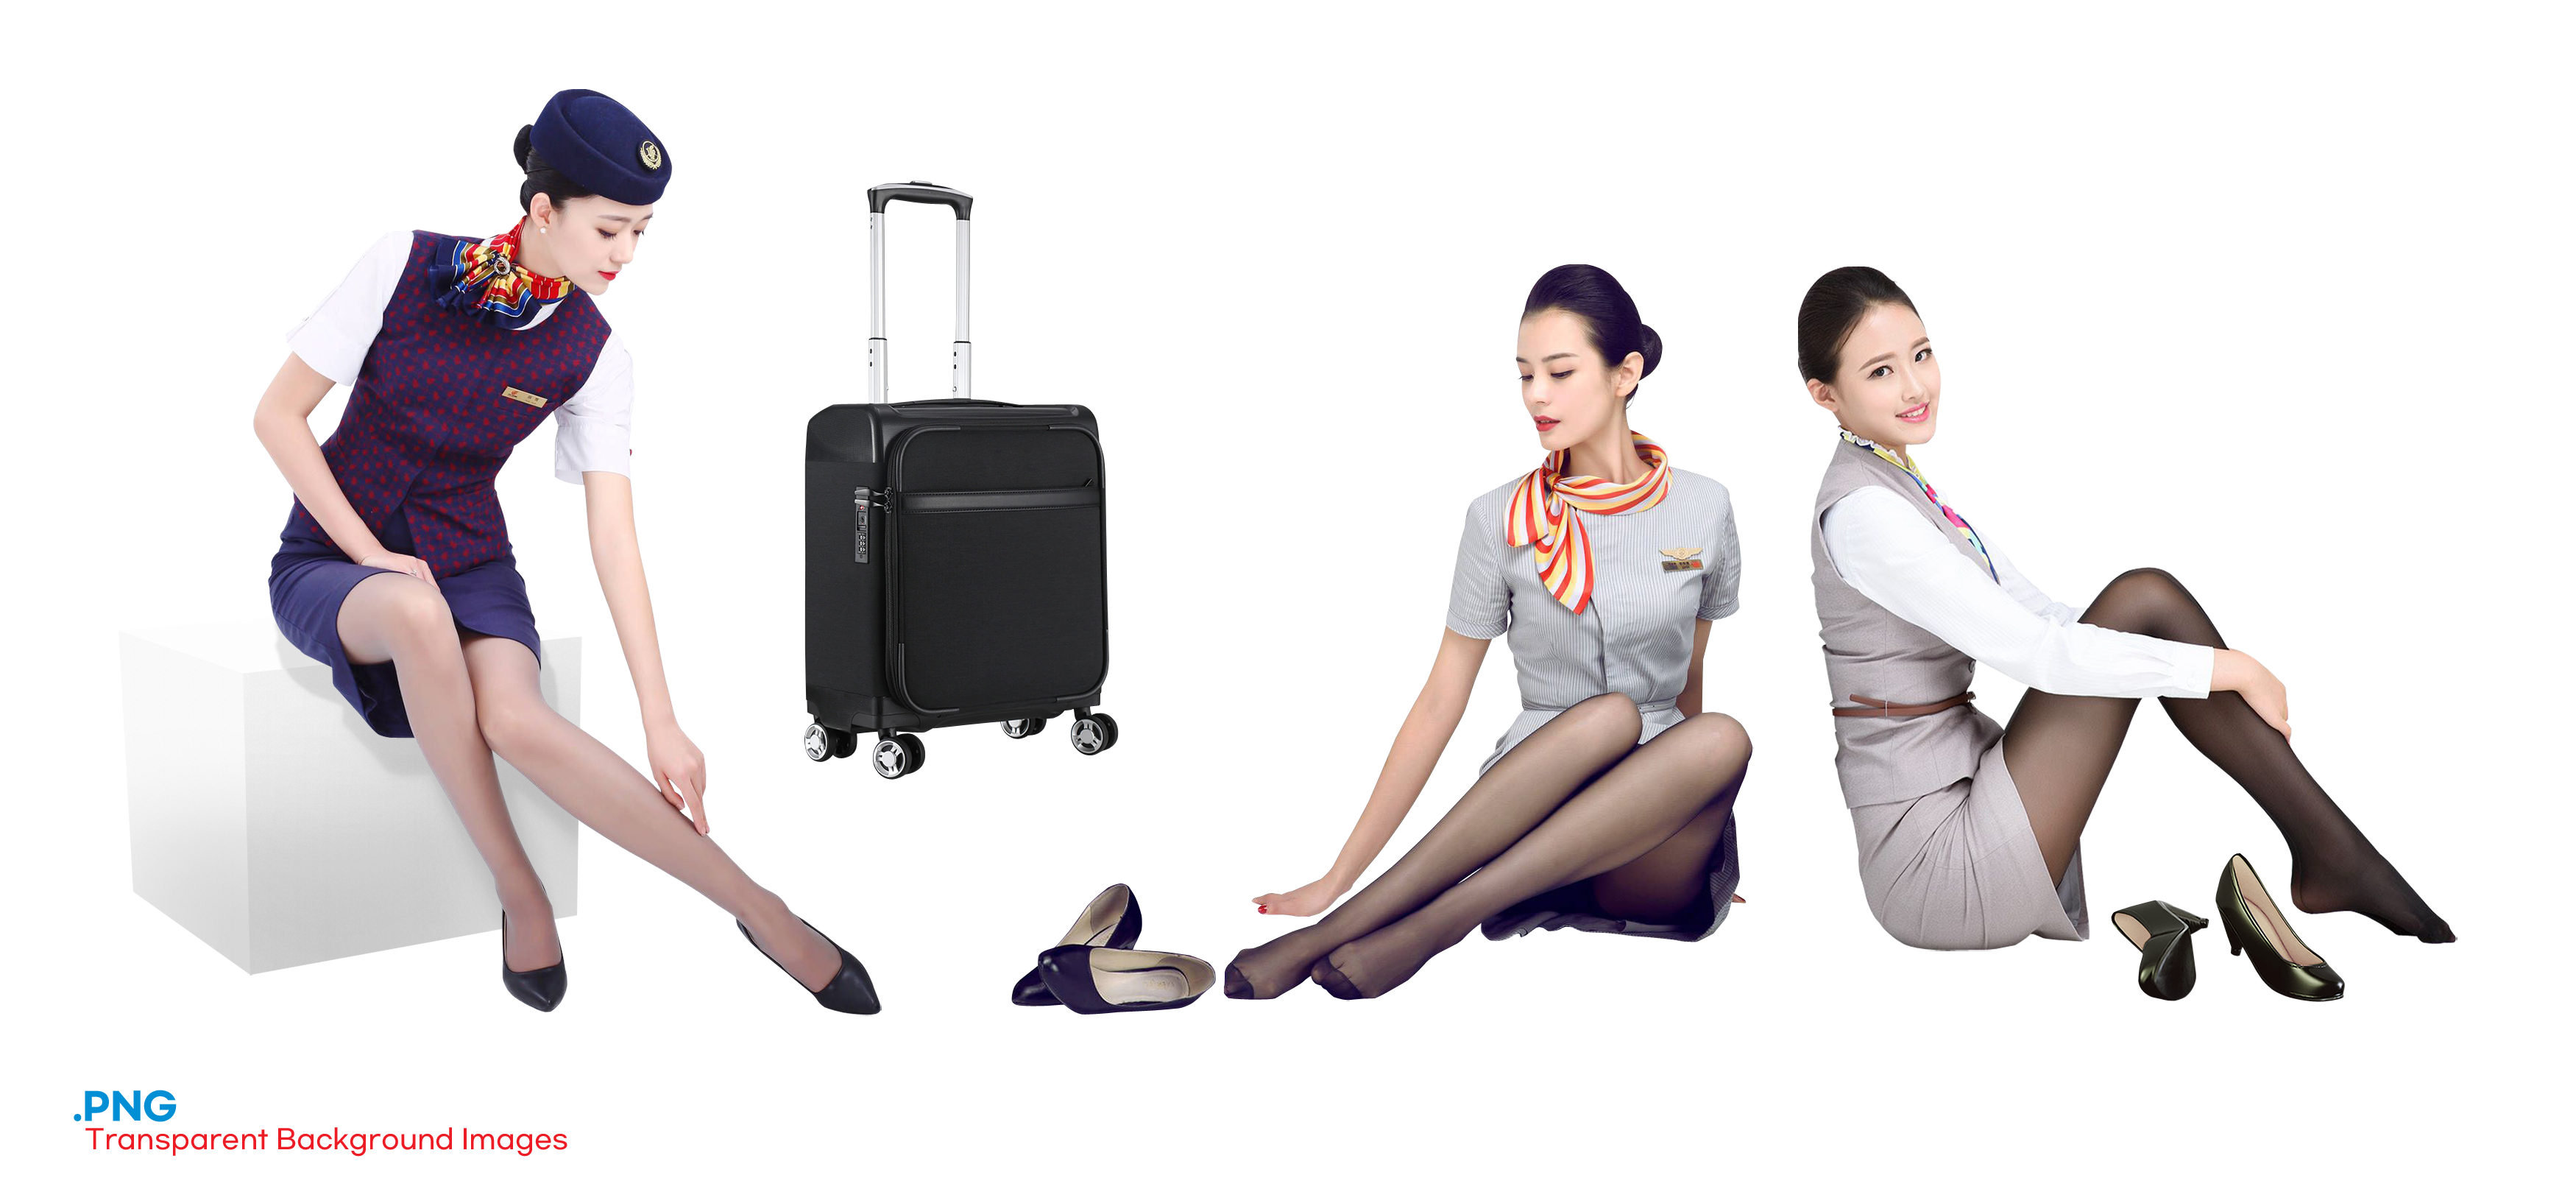 General 3500x1600 transparent background flight attendant png simple background text digital art minimalism Asian women heels luggage smiling teeth